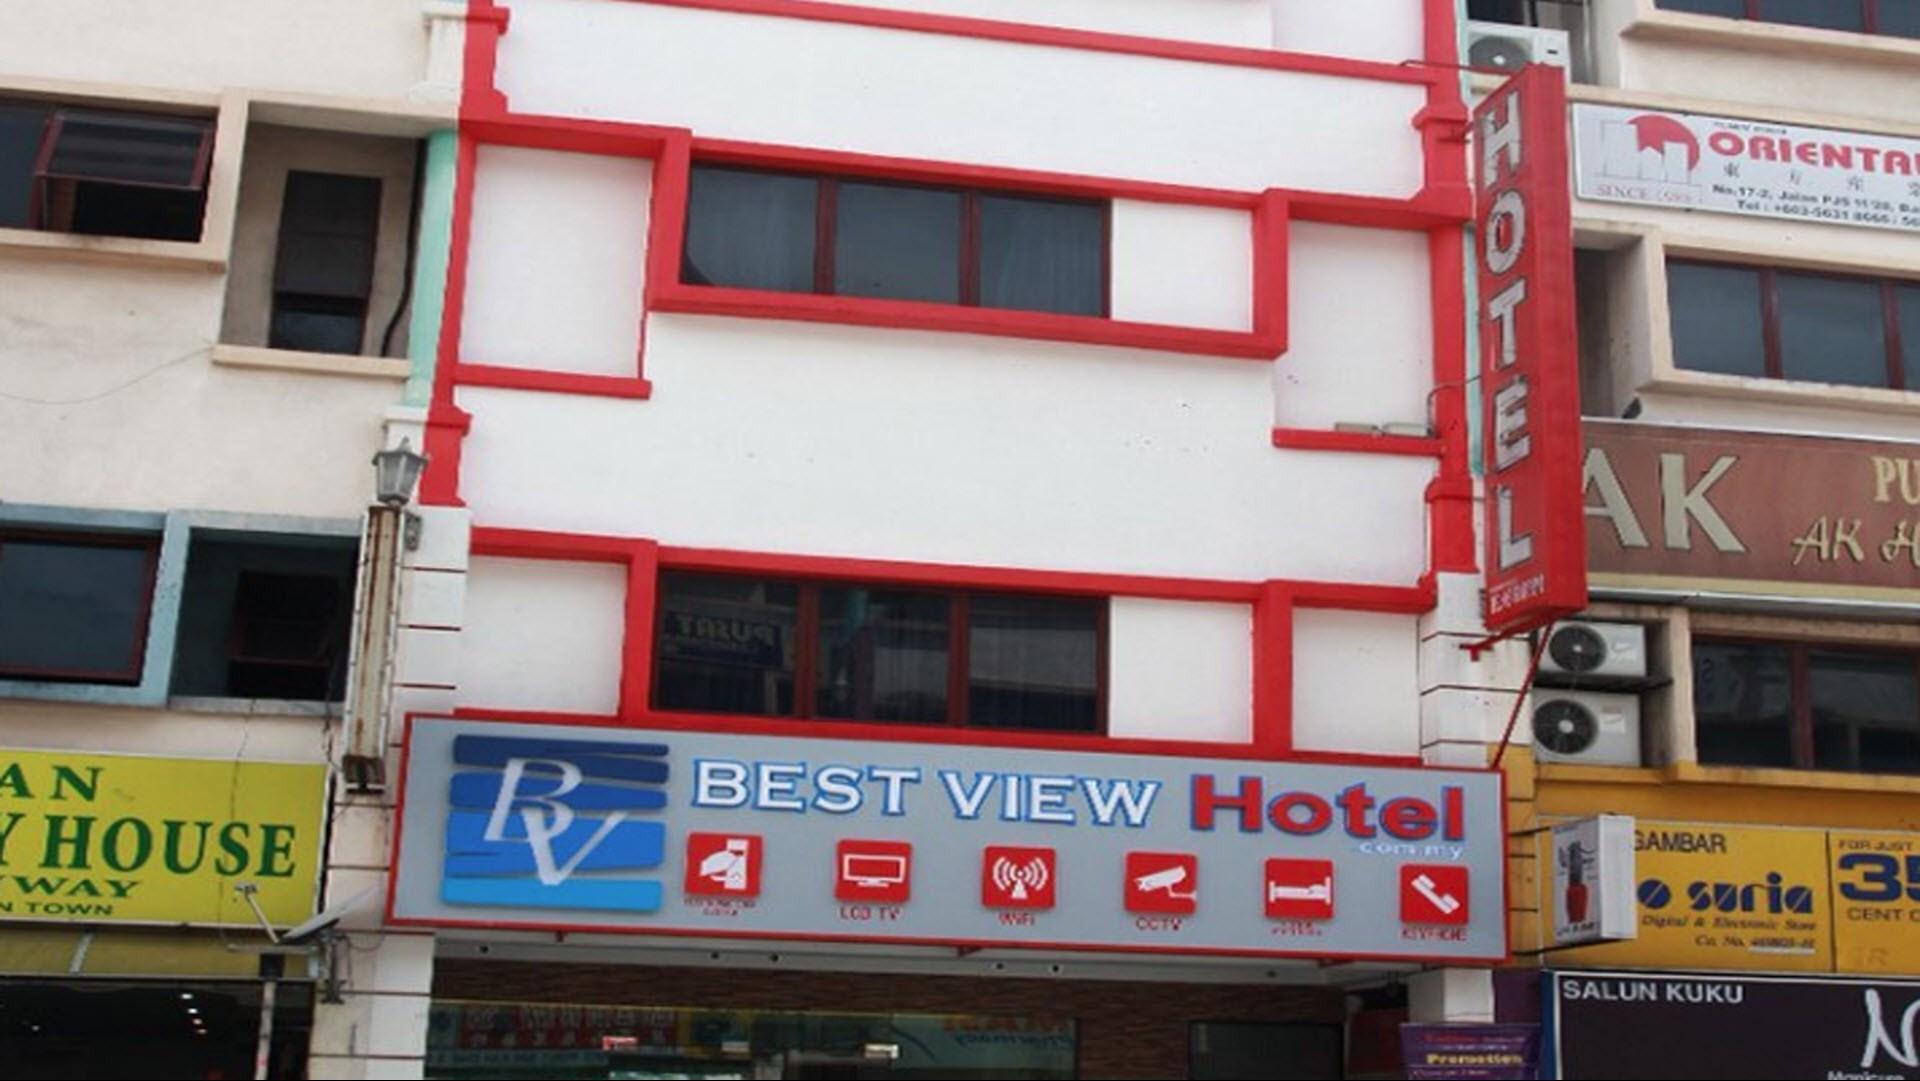 Best View Hotel Bandar Sunway in Petaling Jaya, MY